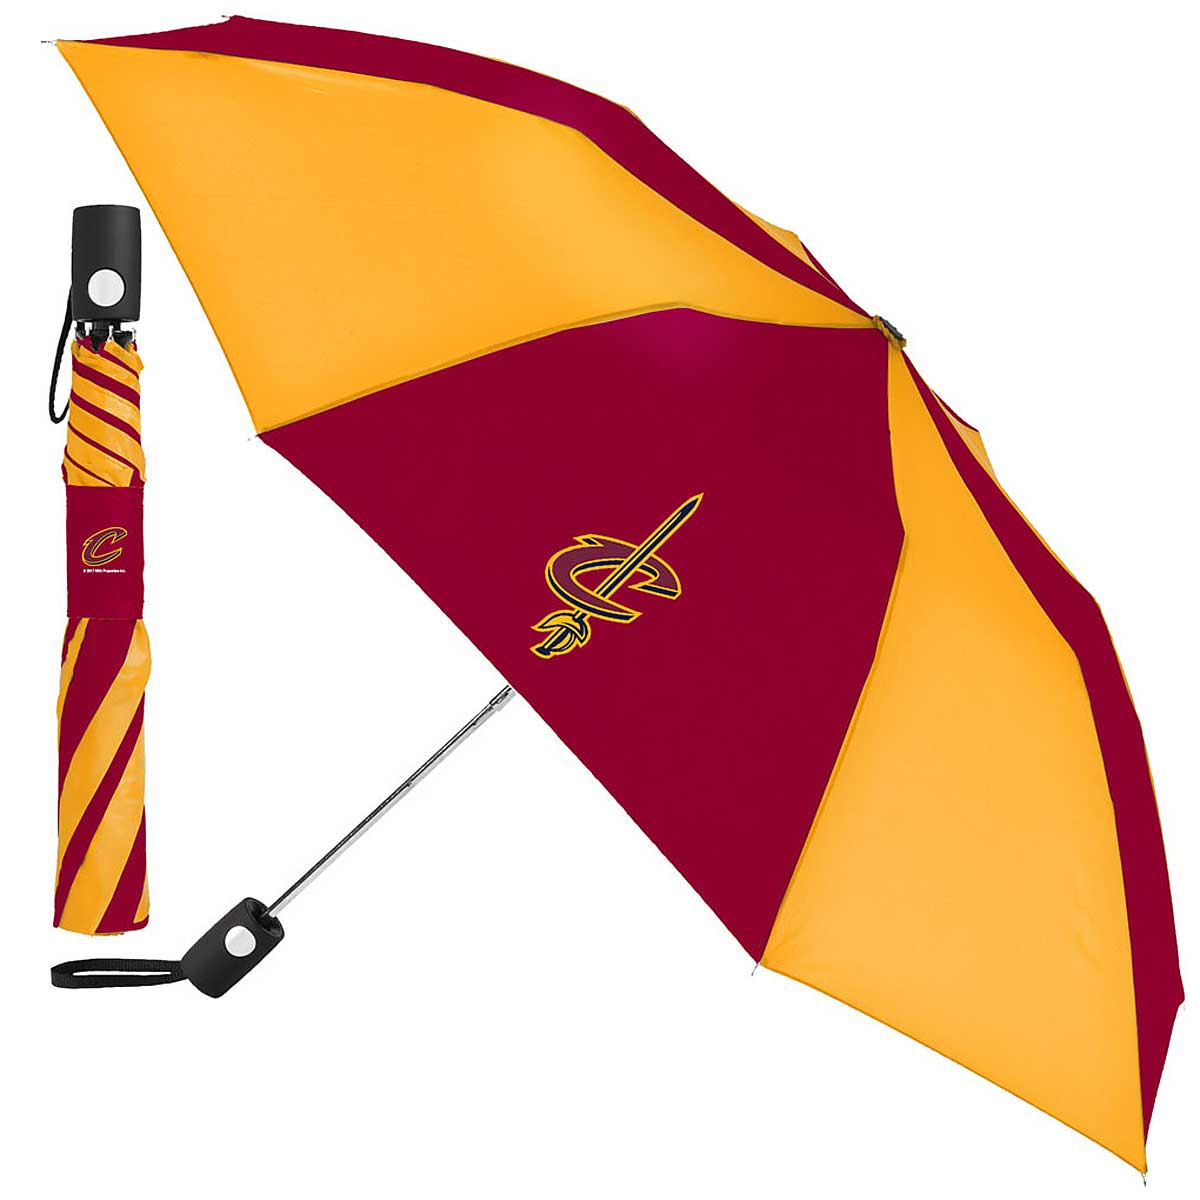 Wincraft Nba Umbrella Cleveland Cavaliers, Yellow/Red